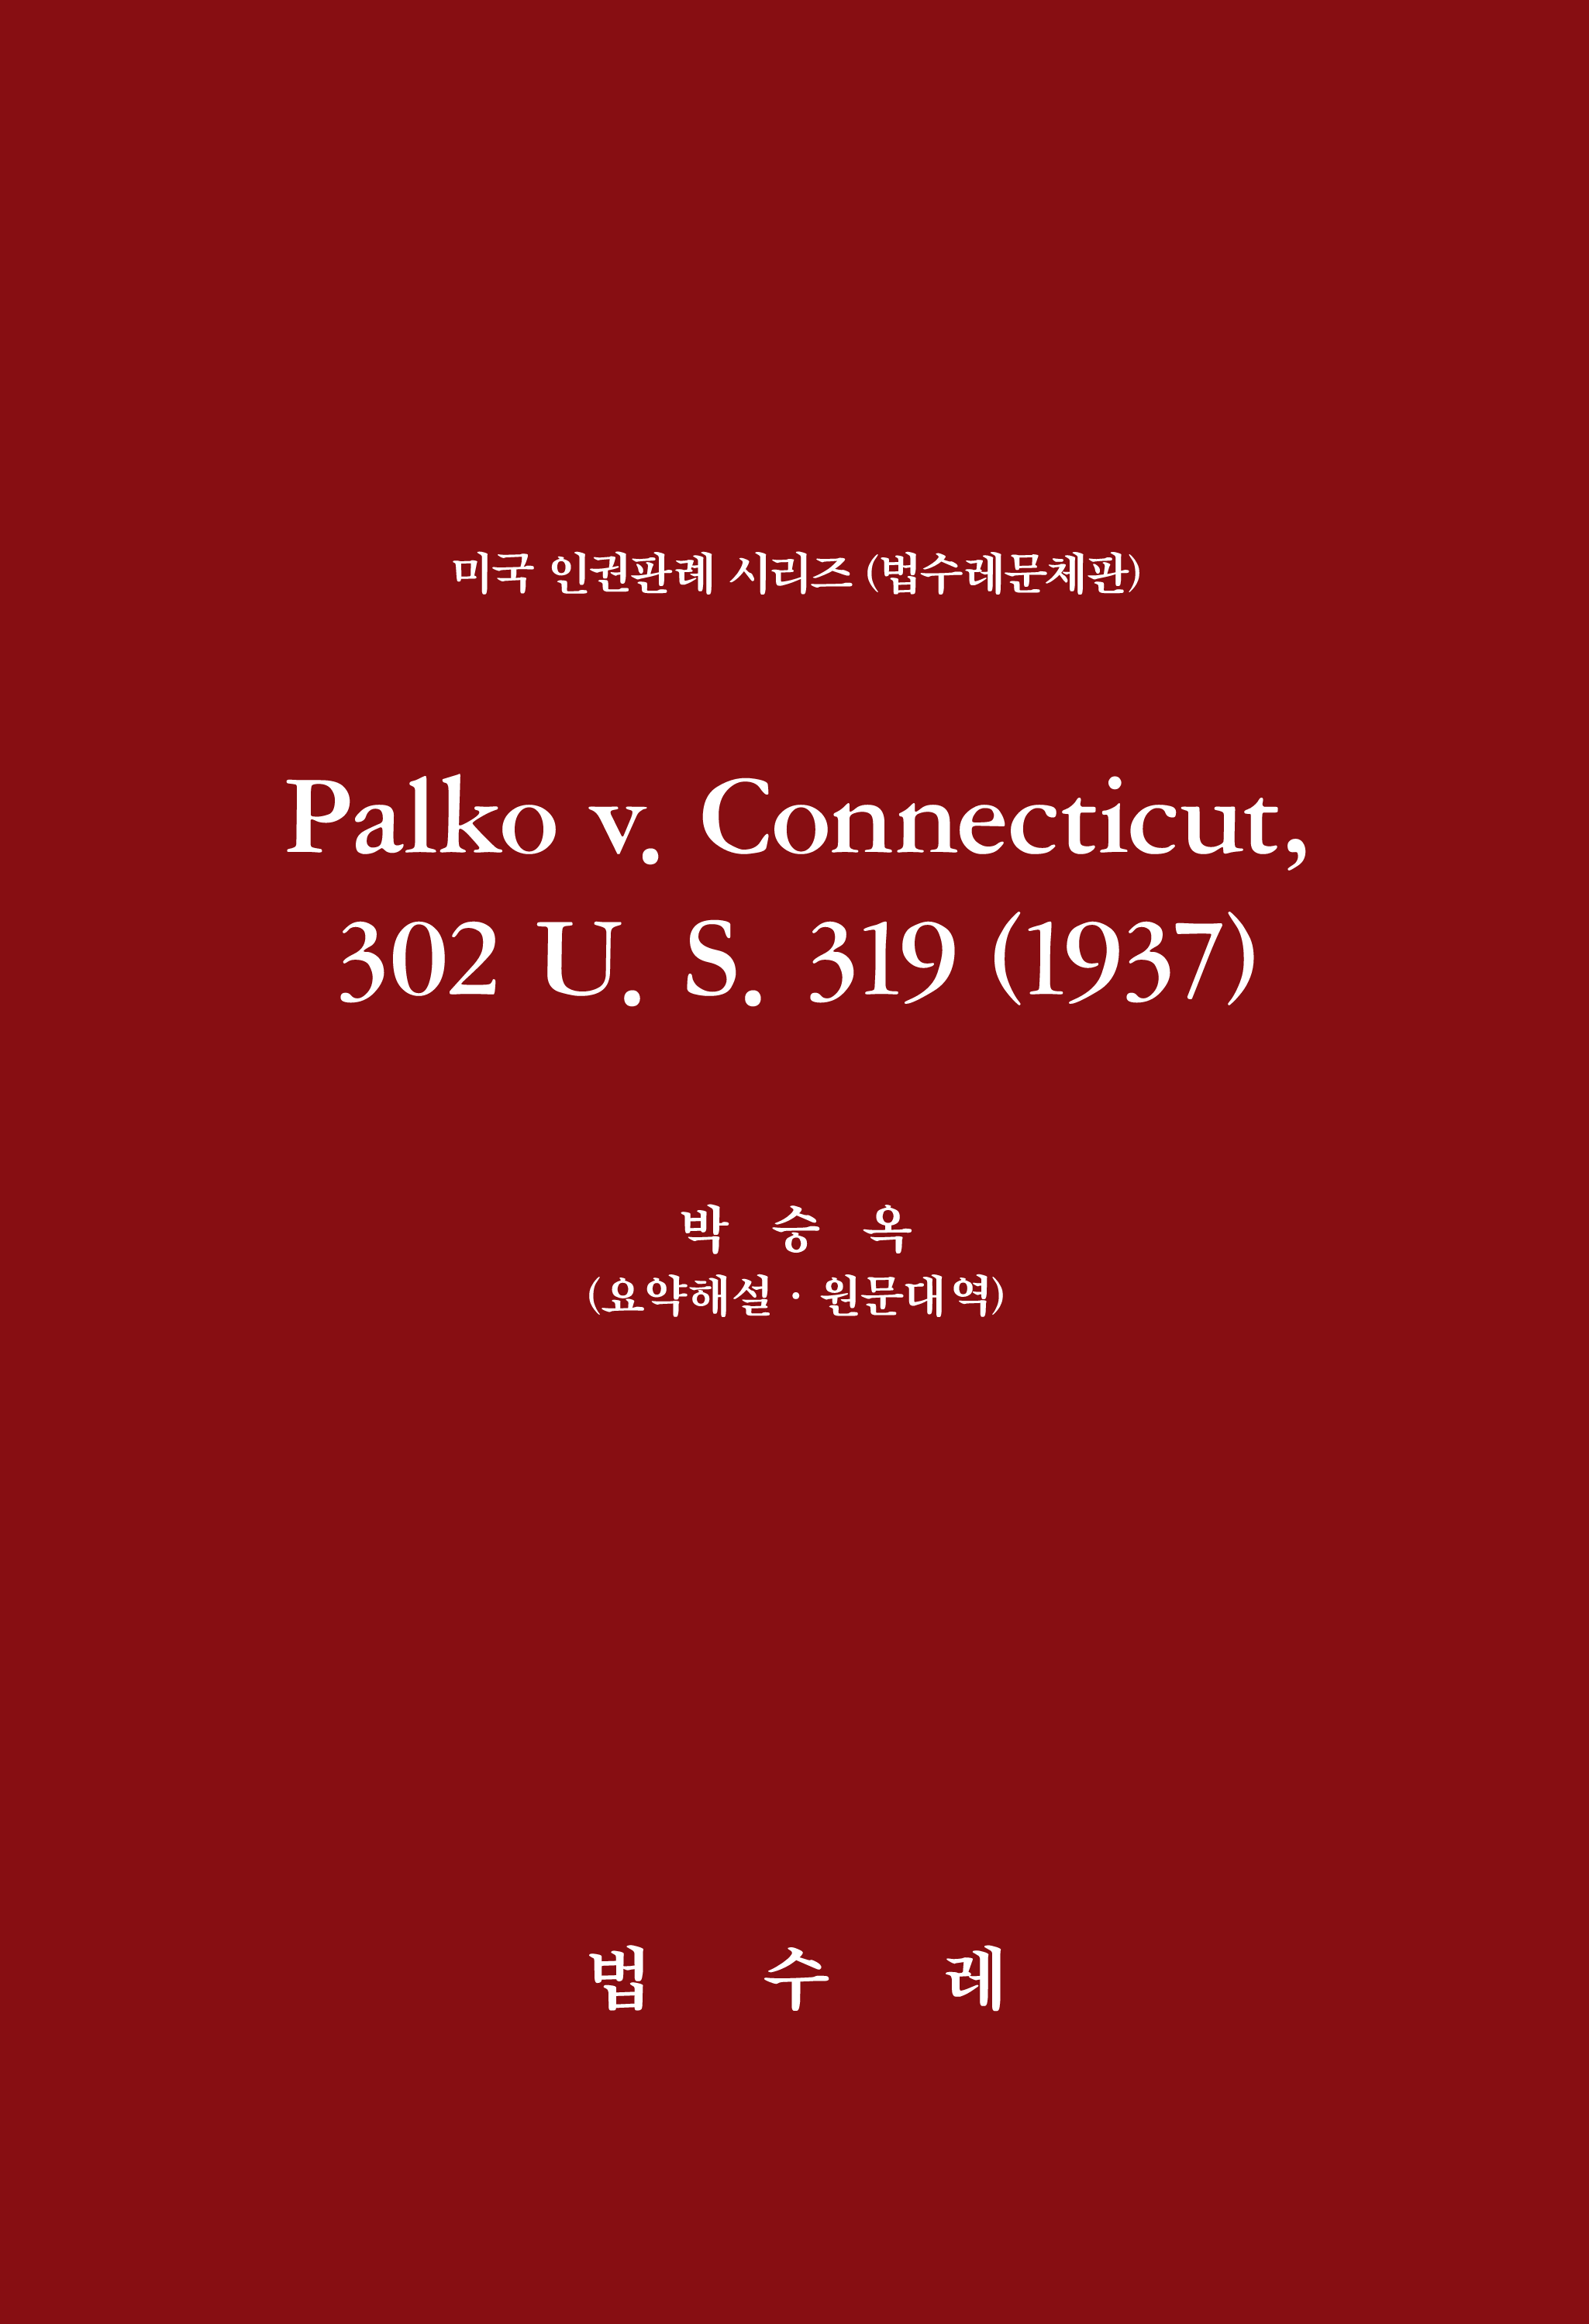 Palko v. Connecticut, 302 U. S. 319 (1937)